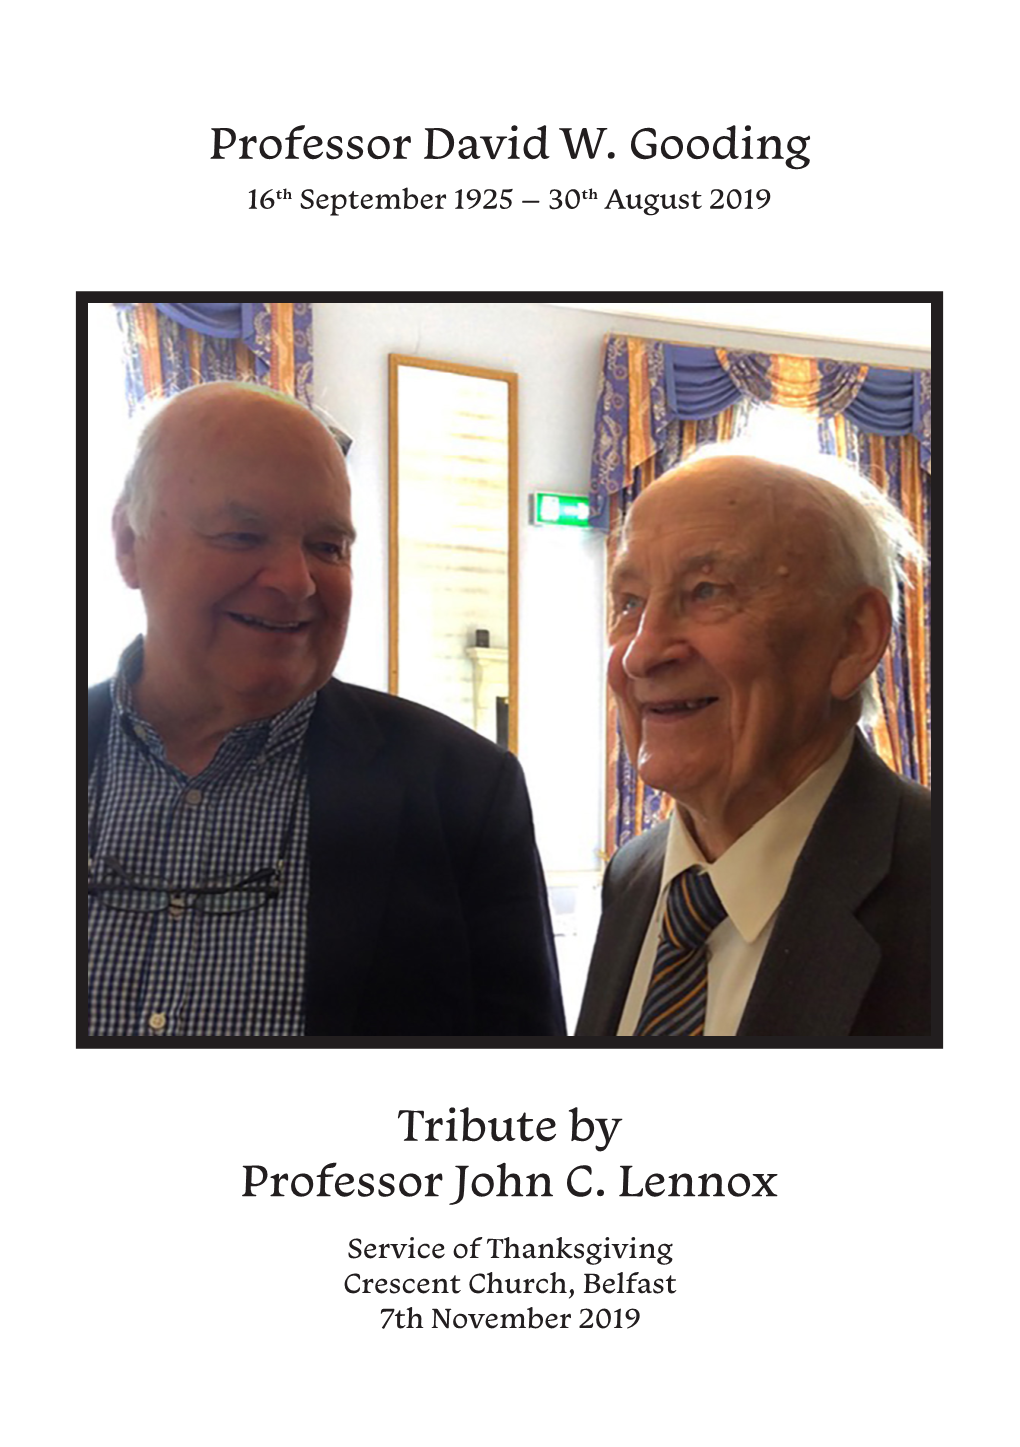 Professor David W. Gooding Tribute by Professor John C. Lennox